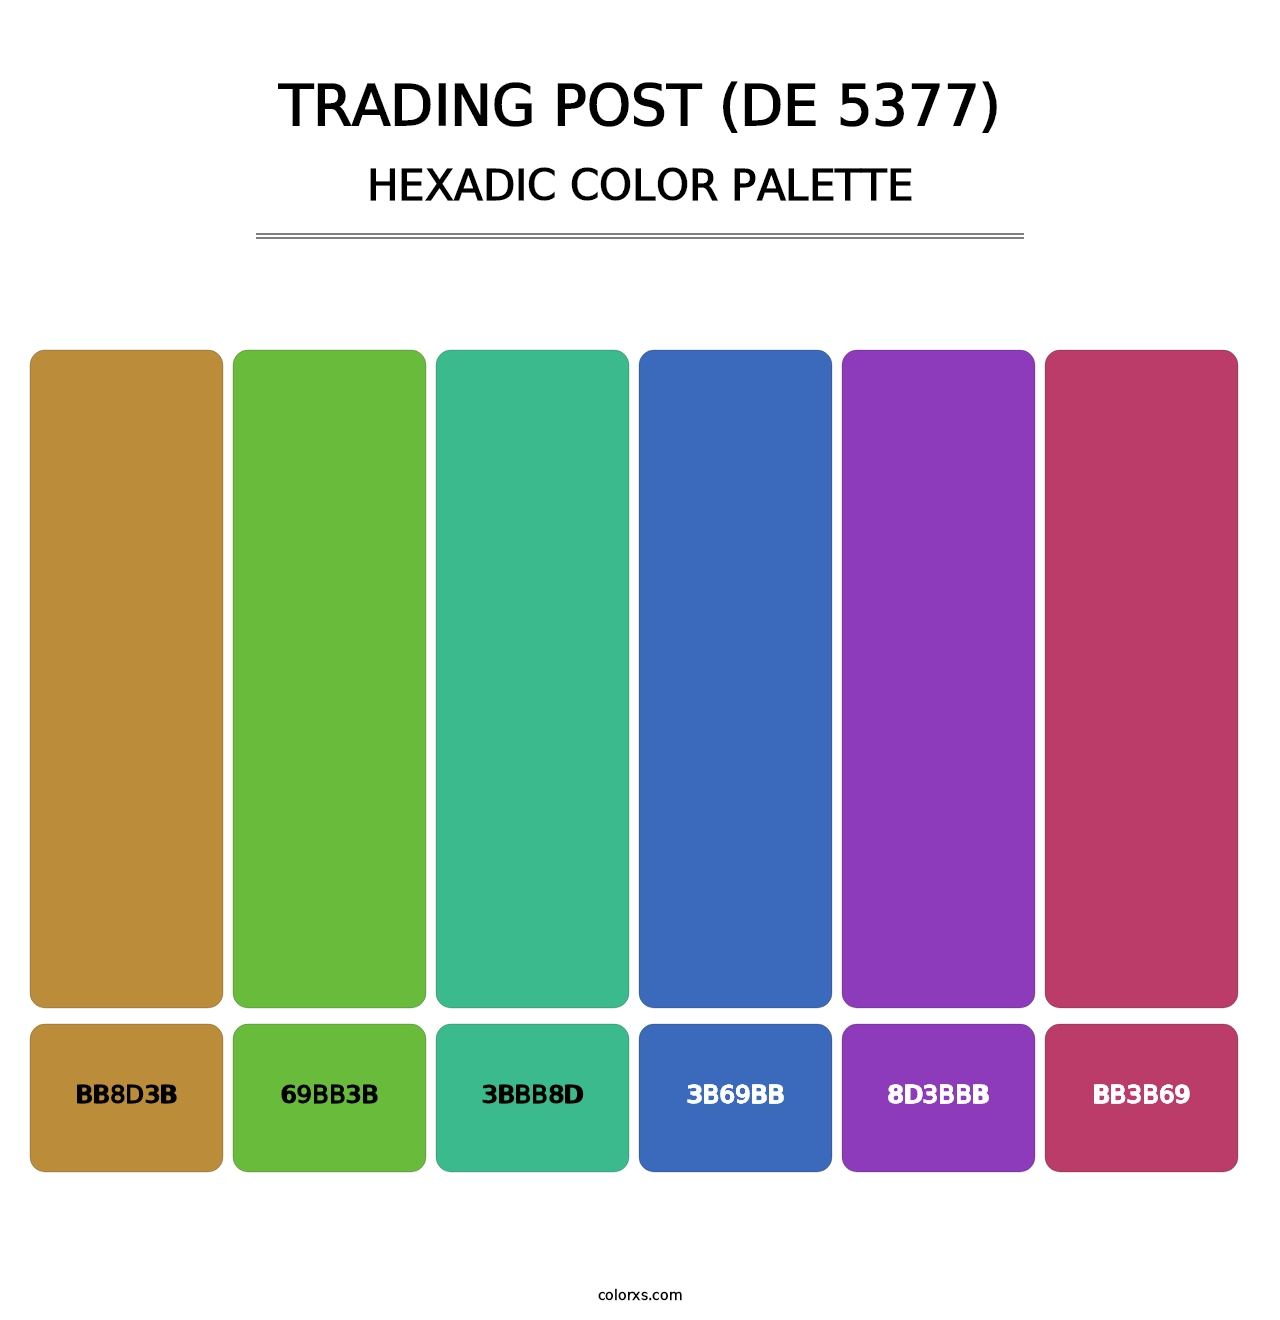 Trading Post (DE 5377) - Hexadic Color Palette